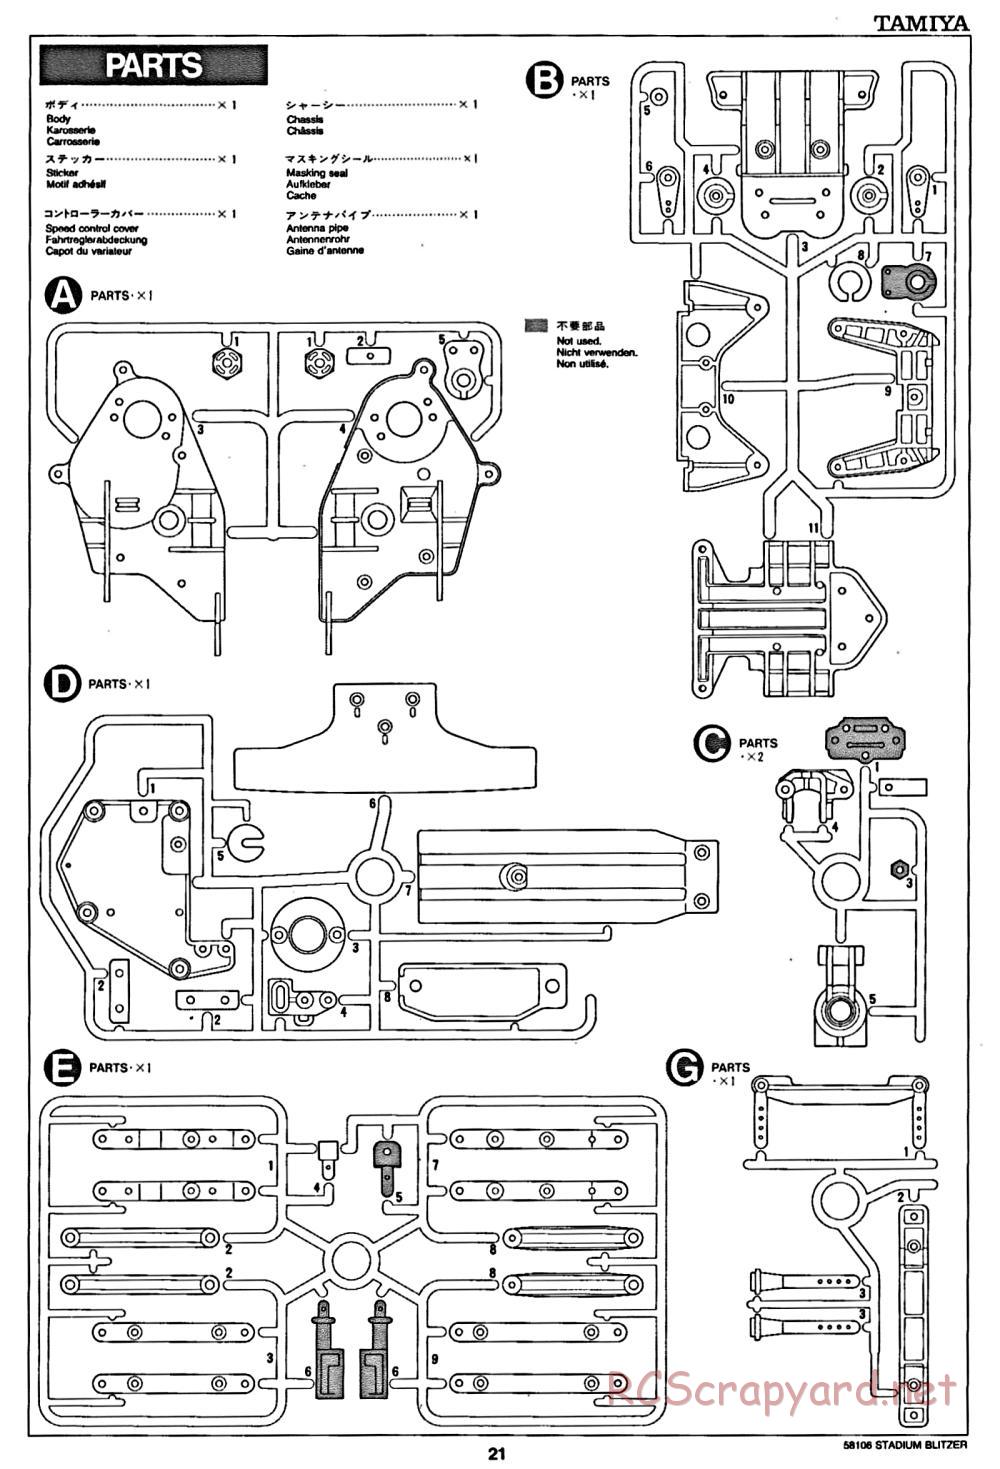 Tamiya - Stadium Blitzer Chassis - Manual - Page 21